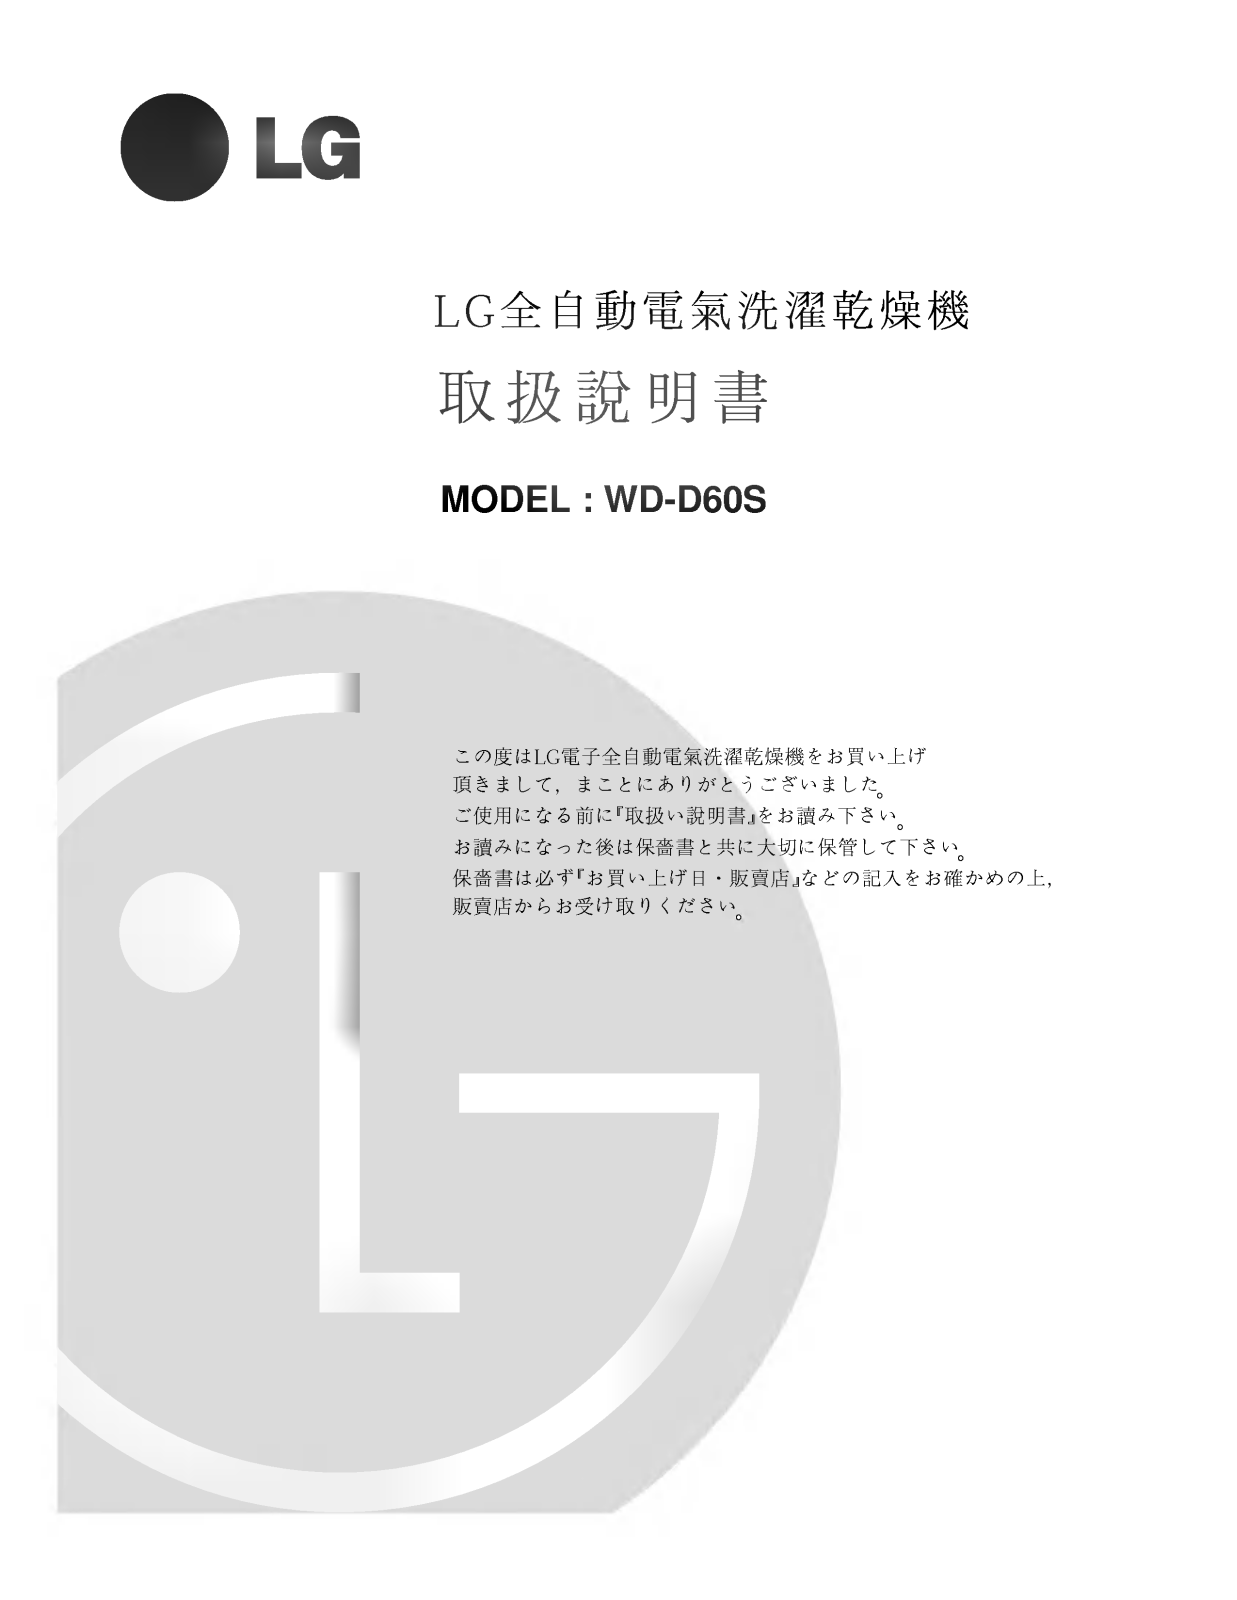 LG WD-1235RD instruction manual